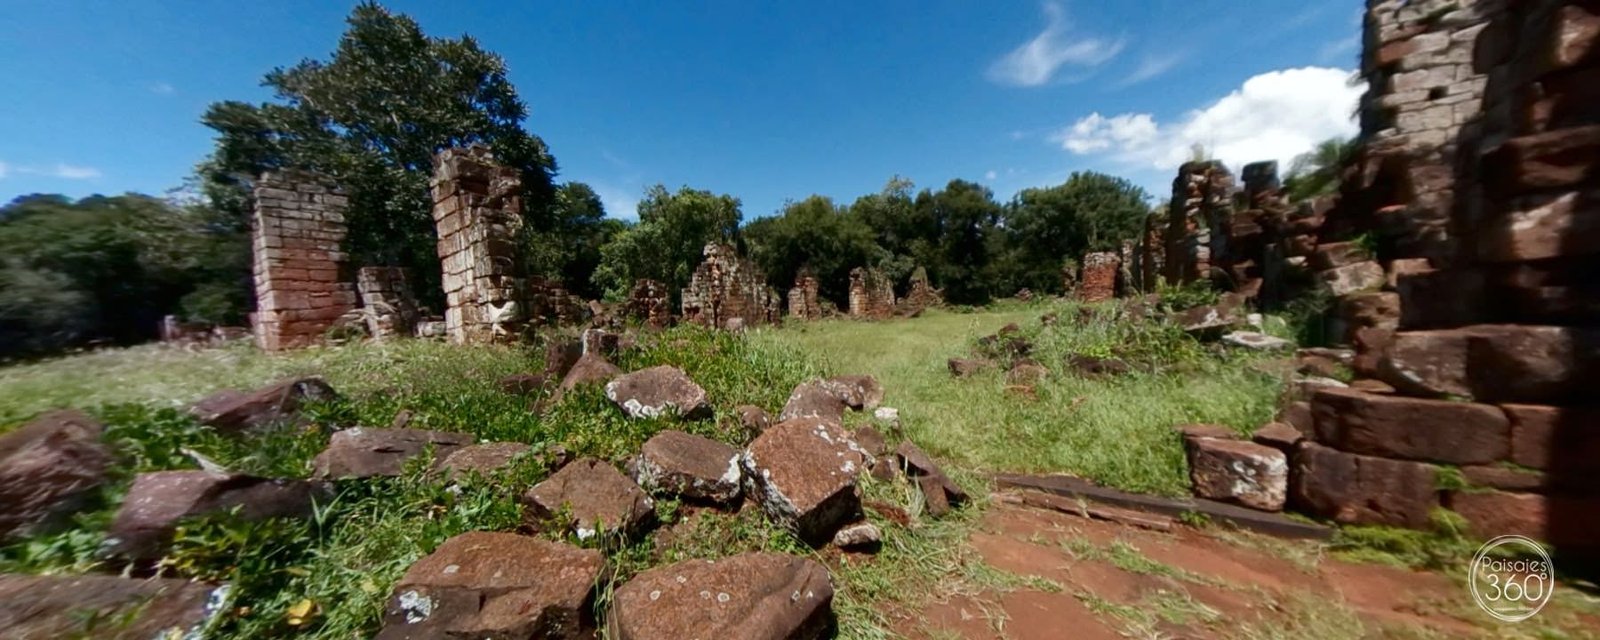 Portada Ruina Santa Ana - Misiones - Argentina